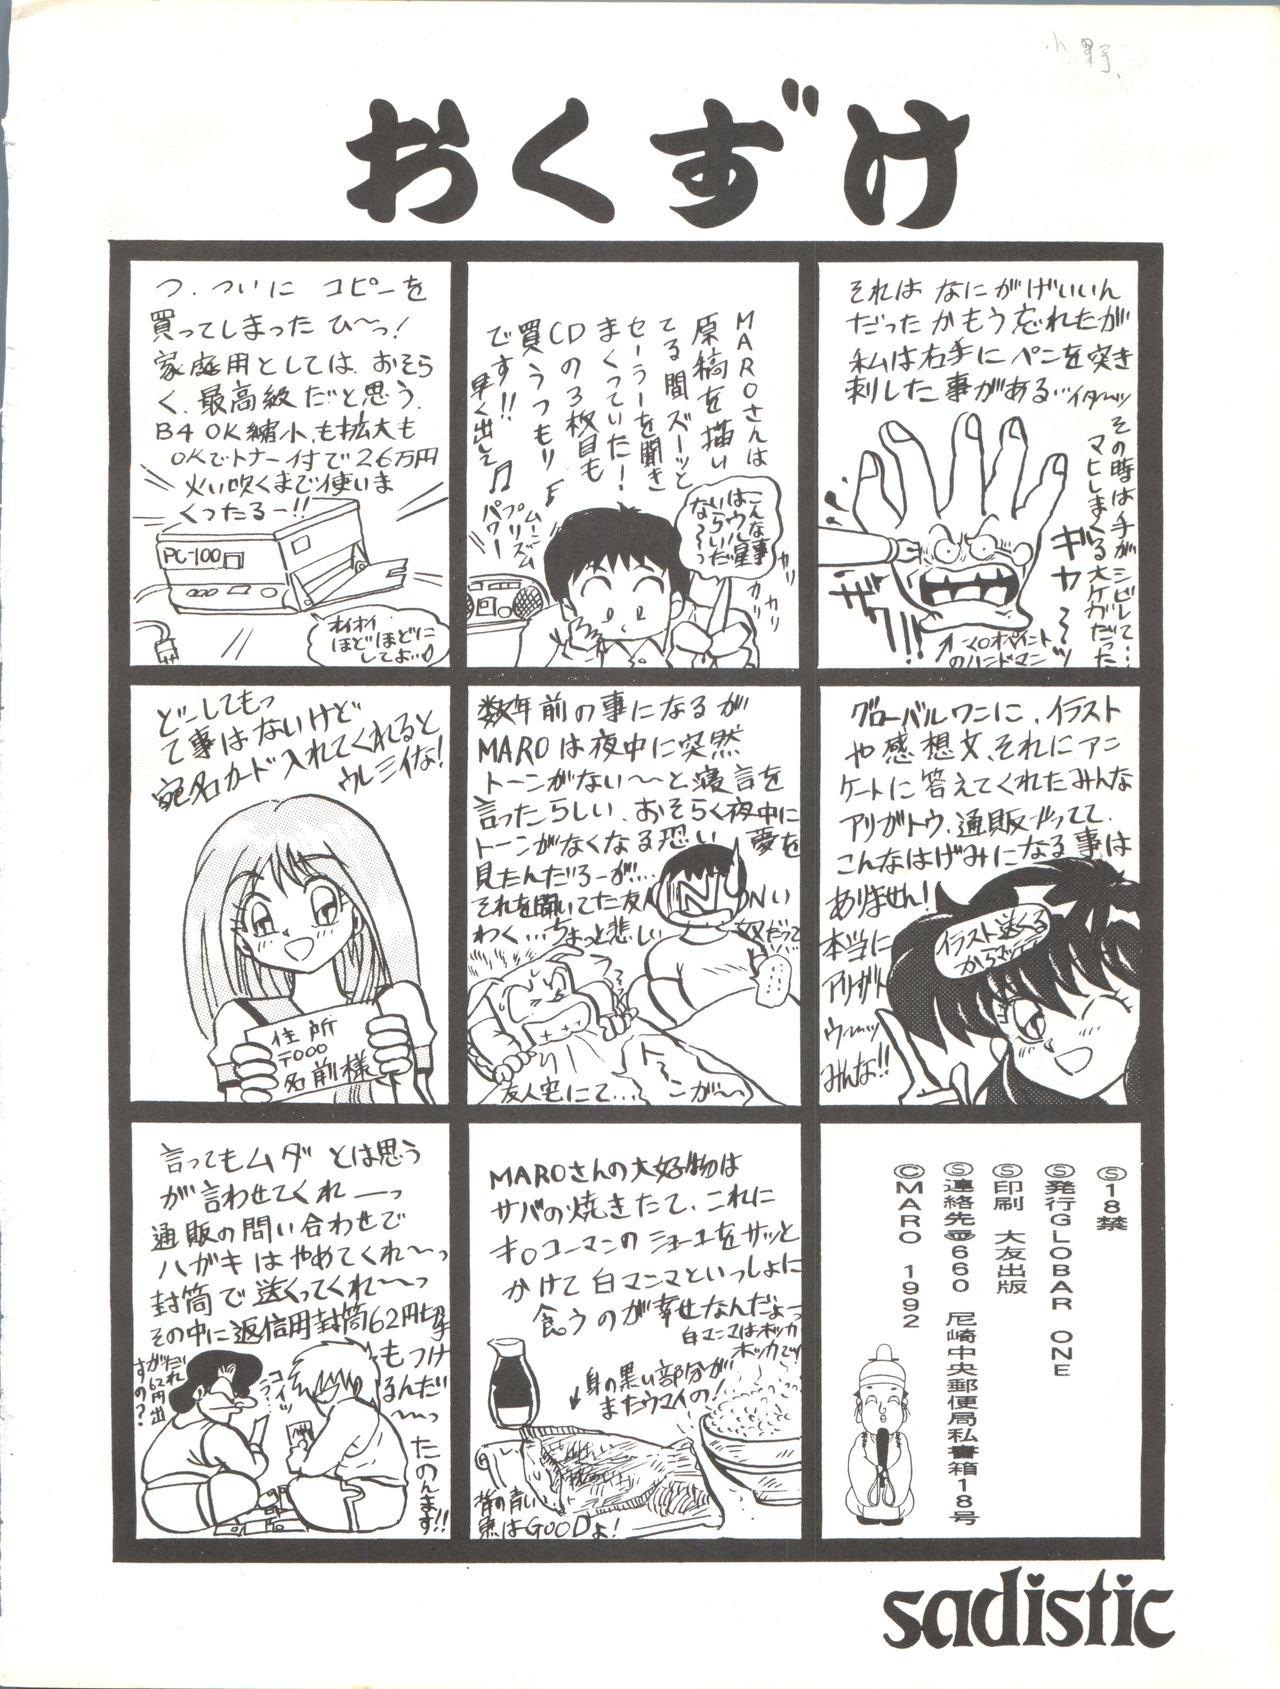 Large Sadistic 6 - Dragon ball z Maison ikkoku Breeding - Page 66